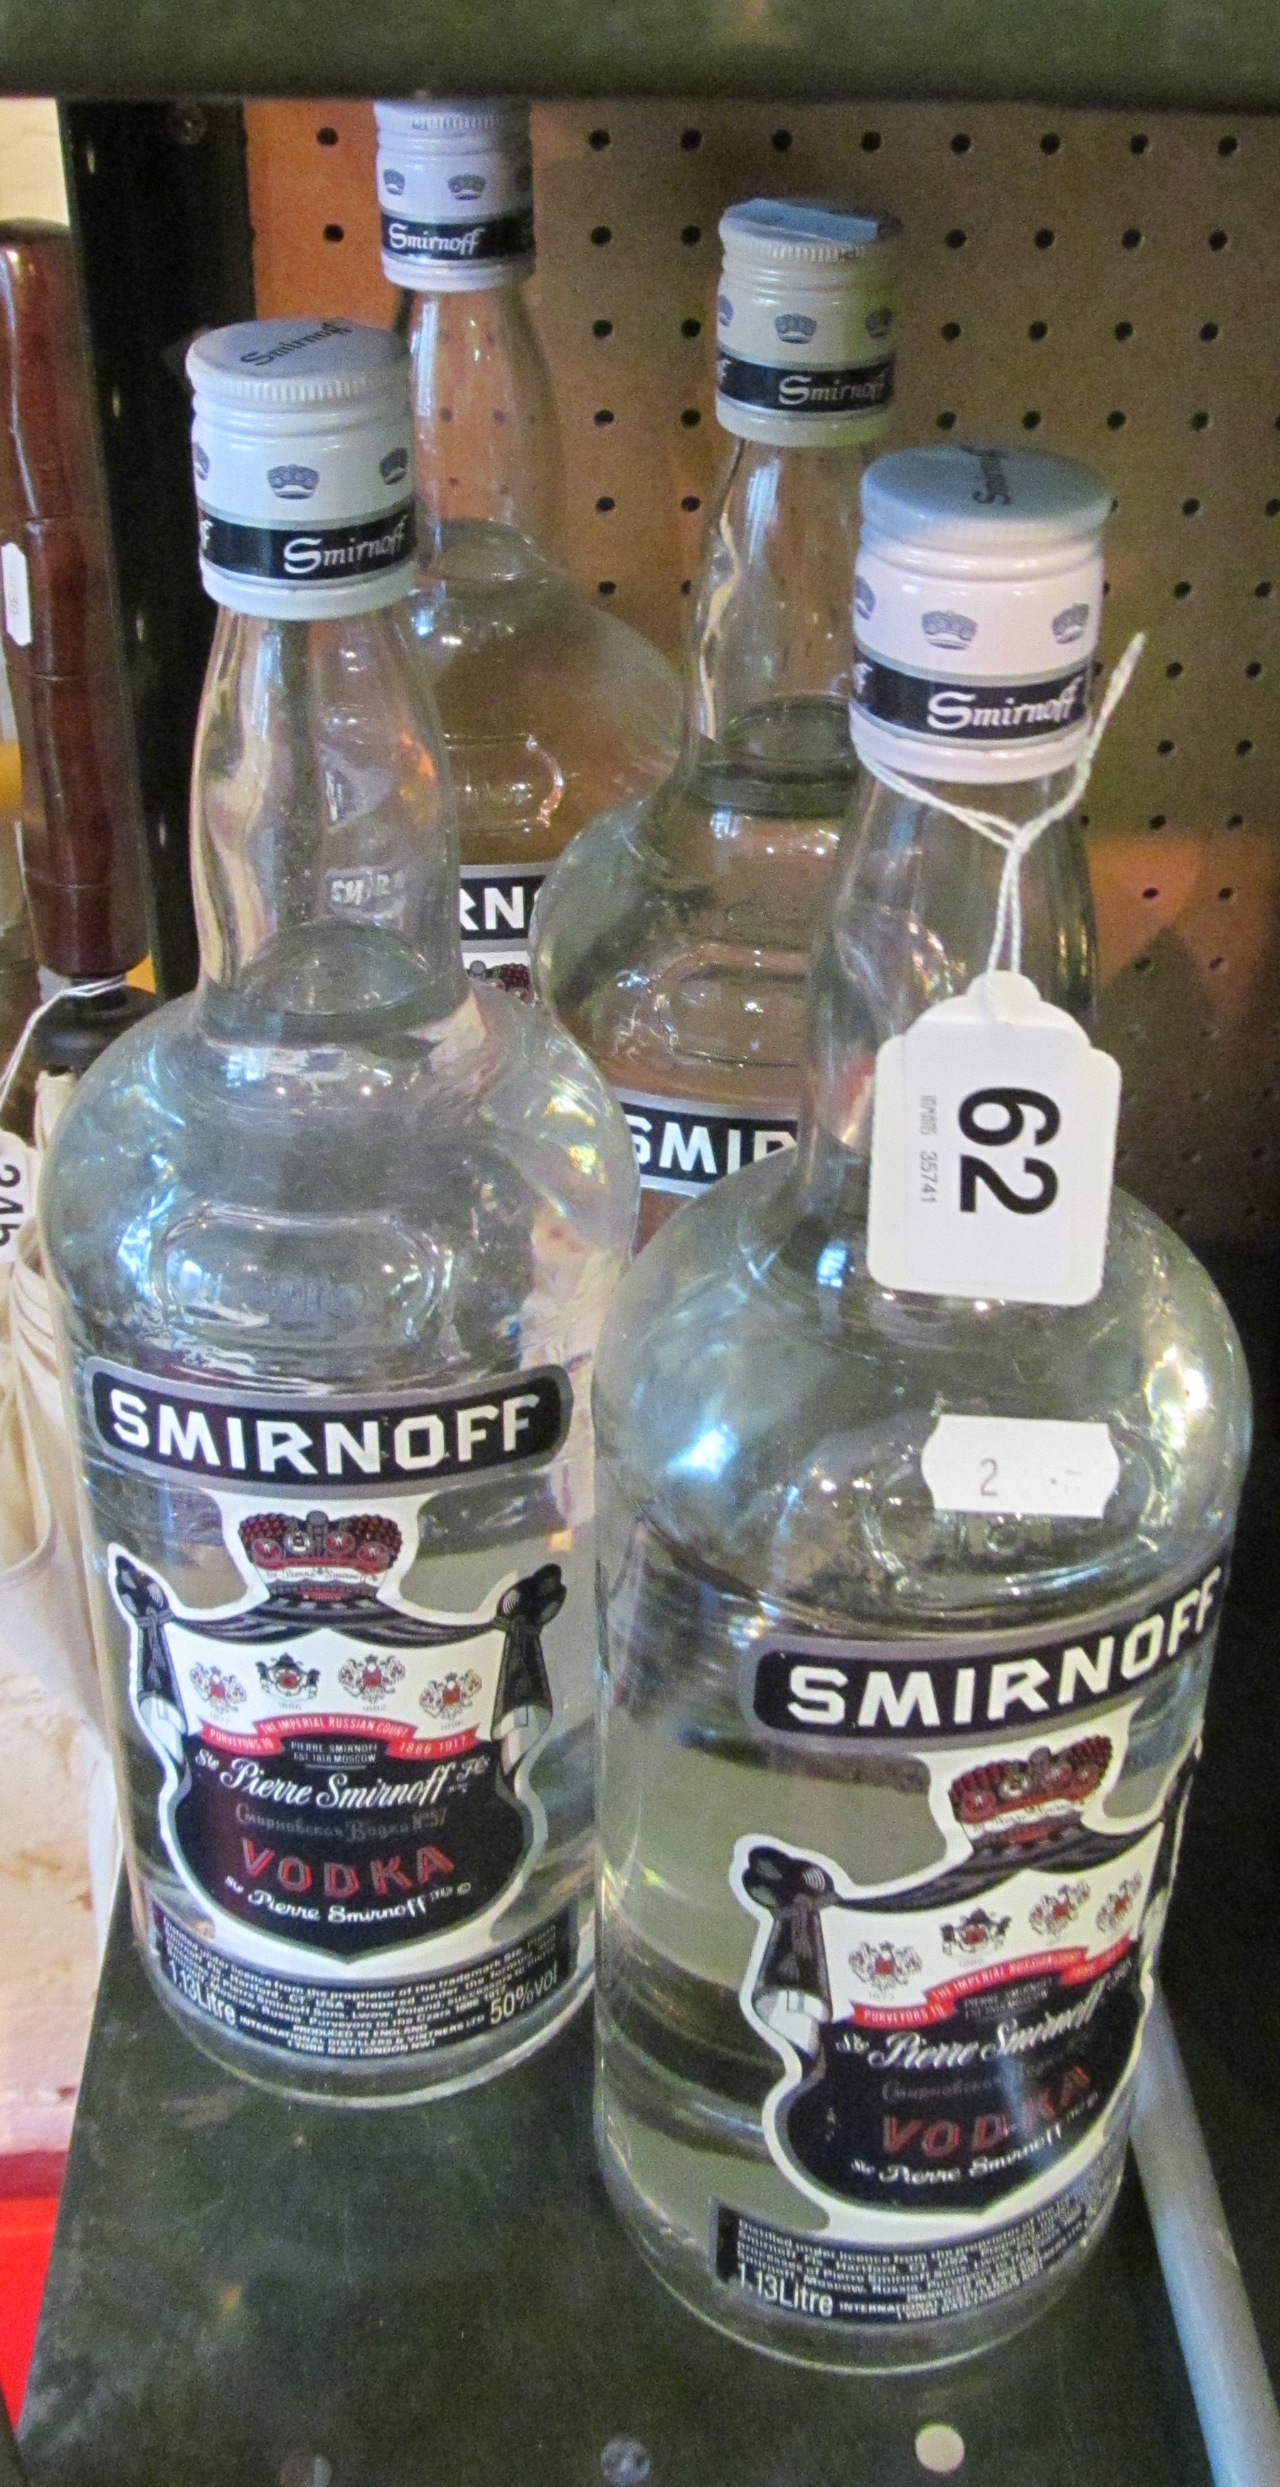 Four bottles of Smirnoff.